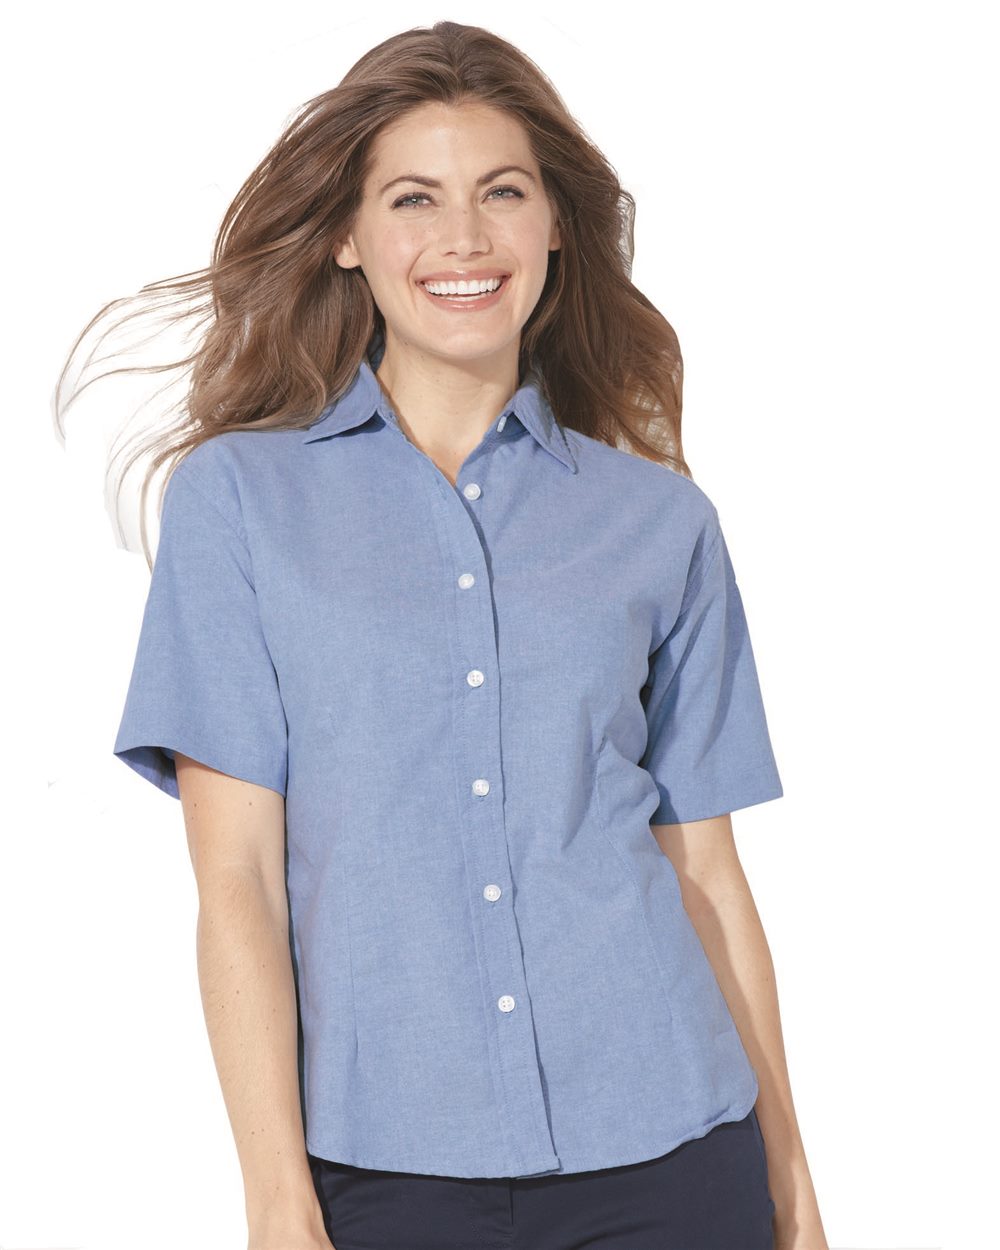 FeatherLite 5231 - Women's Short Sleeve Stain Resistant Oxford Shirt